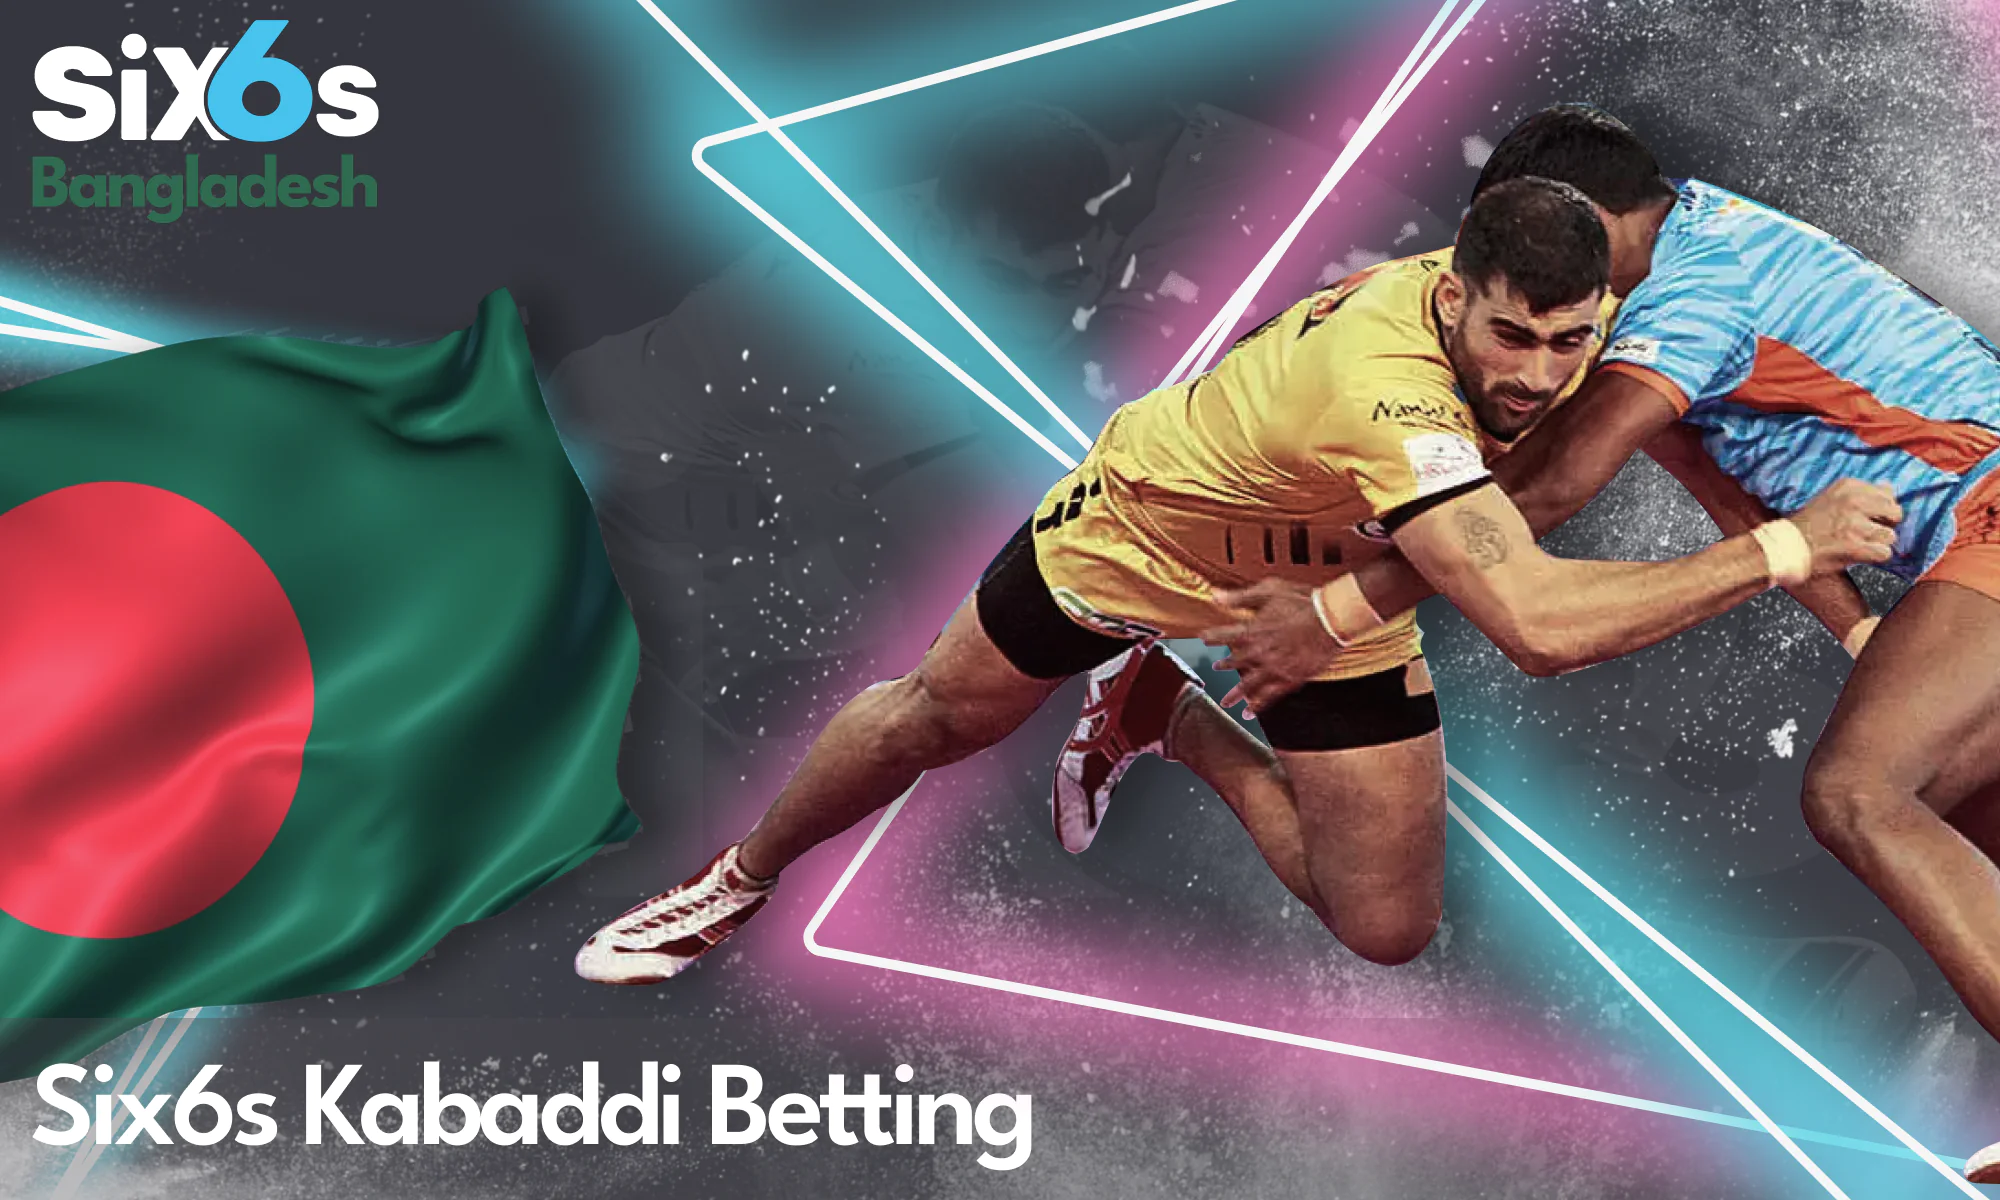 Six6s Kabaddi betting for players from Bangladesh